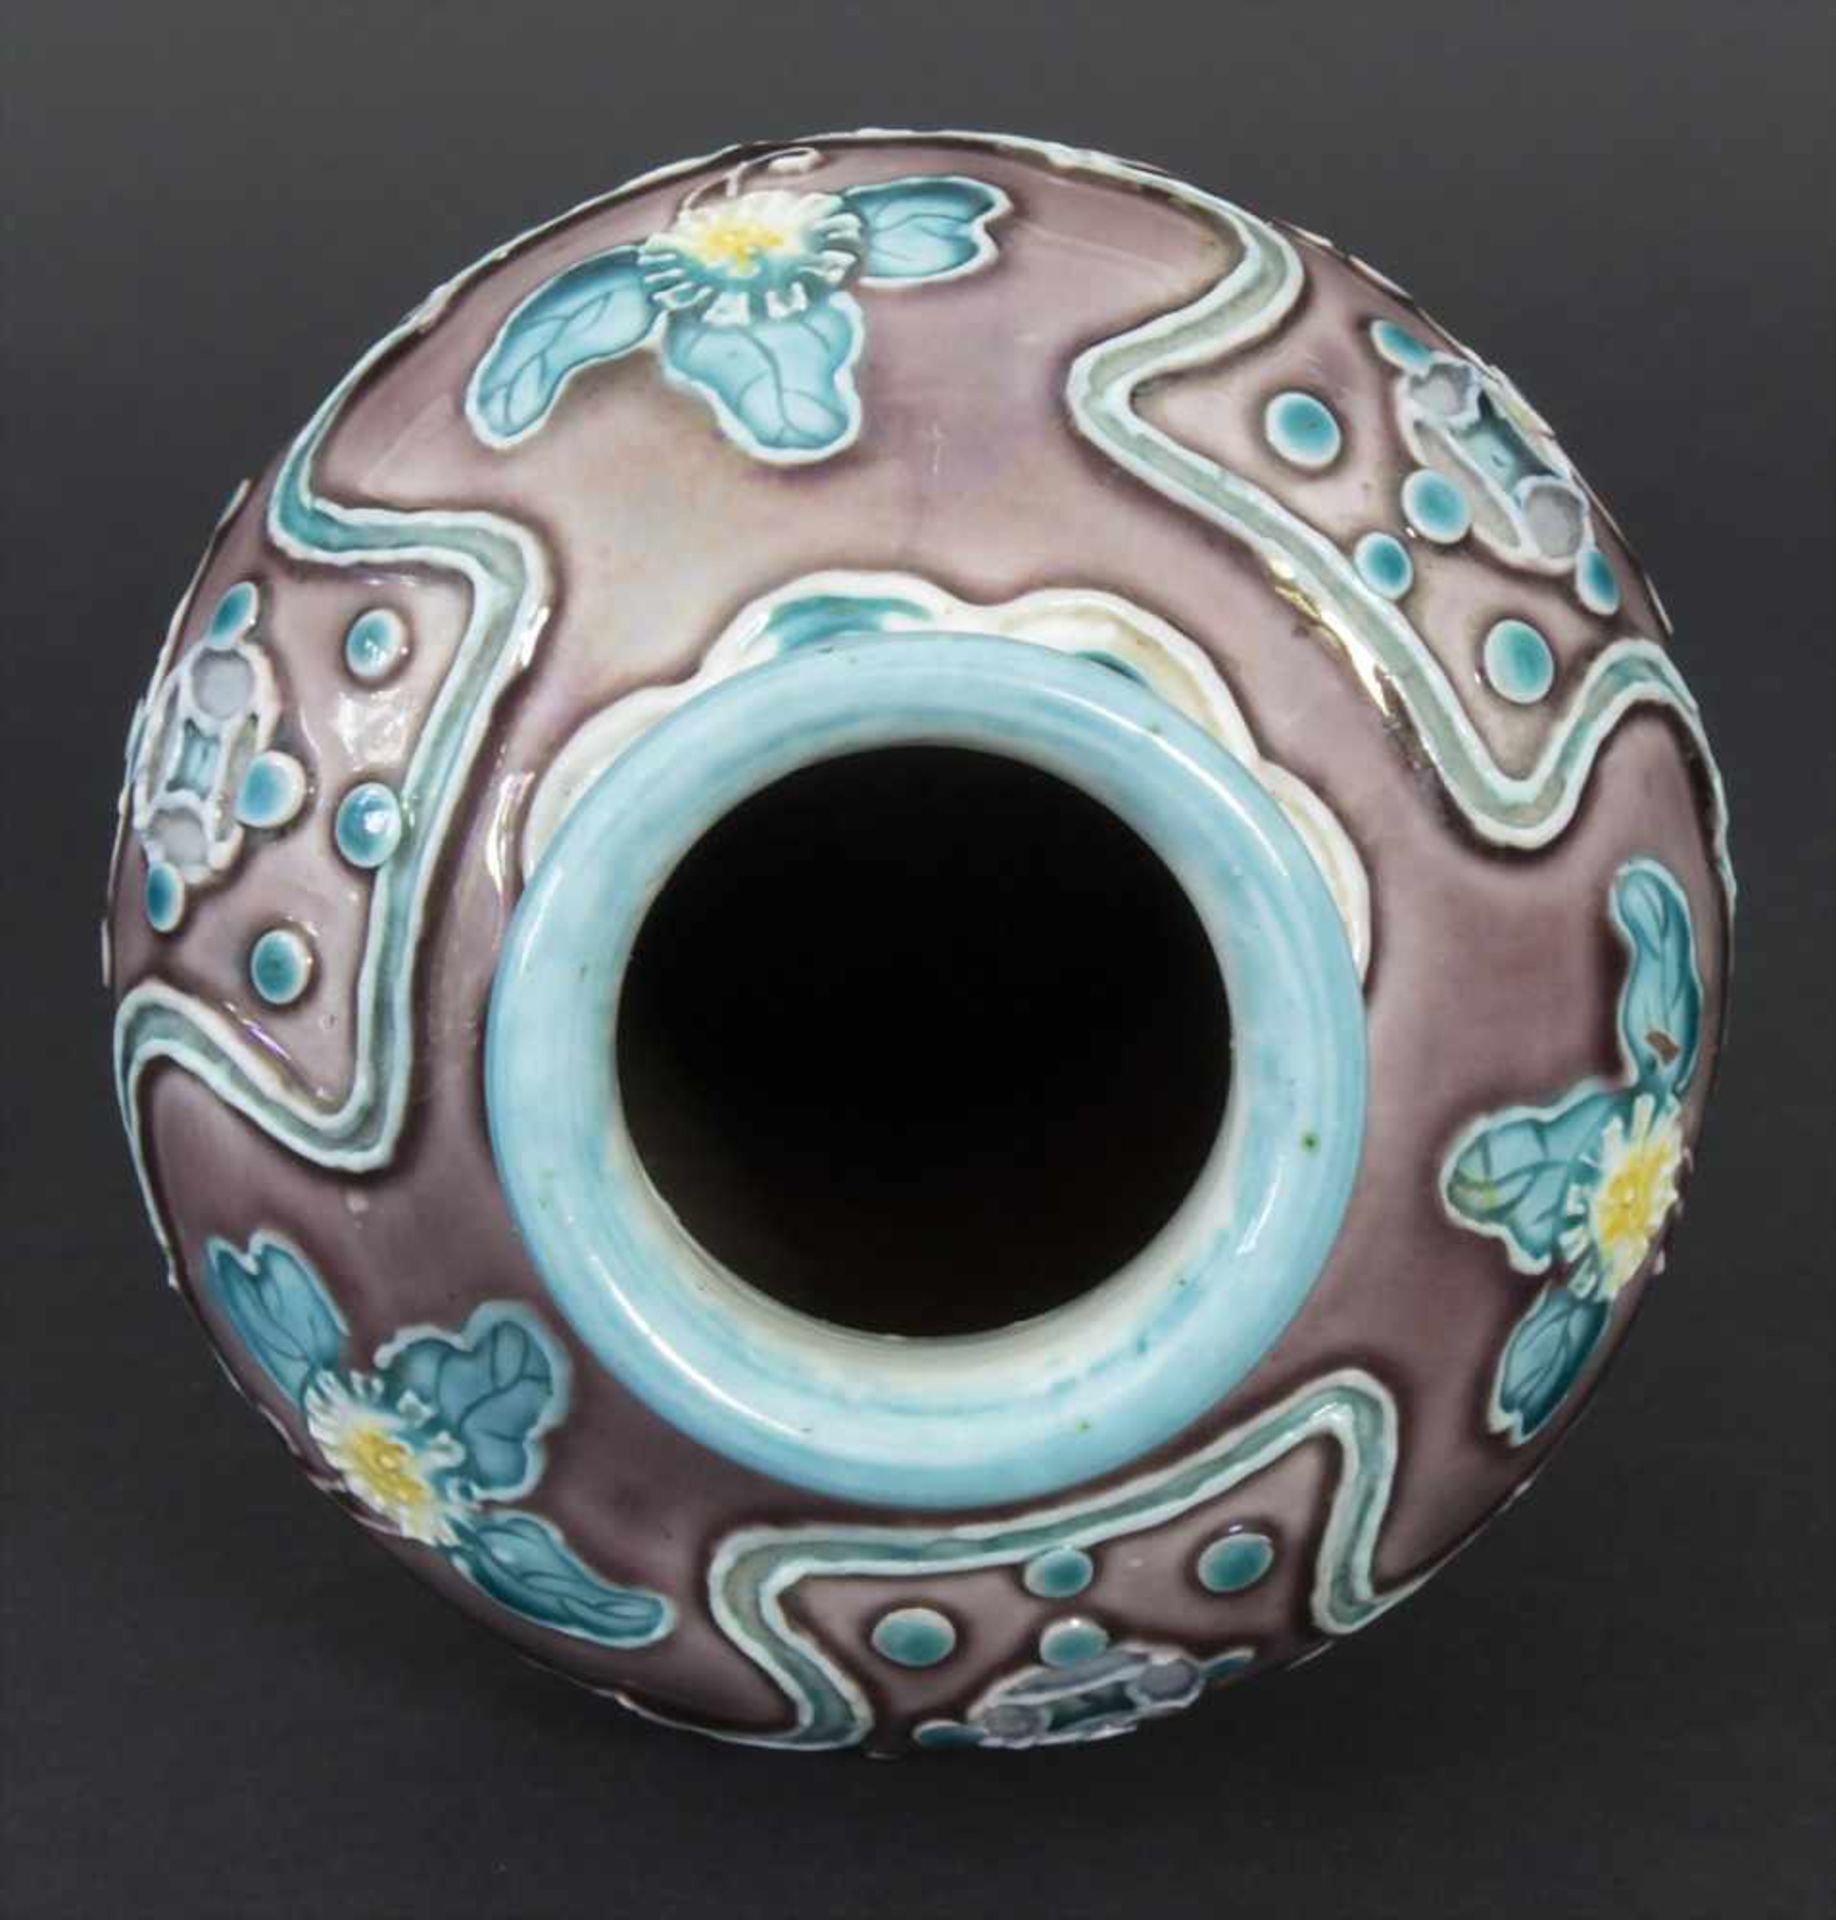 Fahua-Vase, China, wohl 18./19. Jh.Material: Bisquitporzellan, Auflagen in Fahuatechnik, polychrom - Image 7 of 13